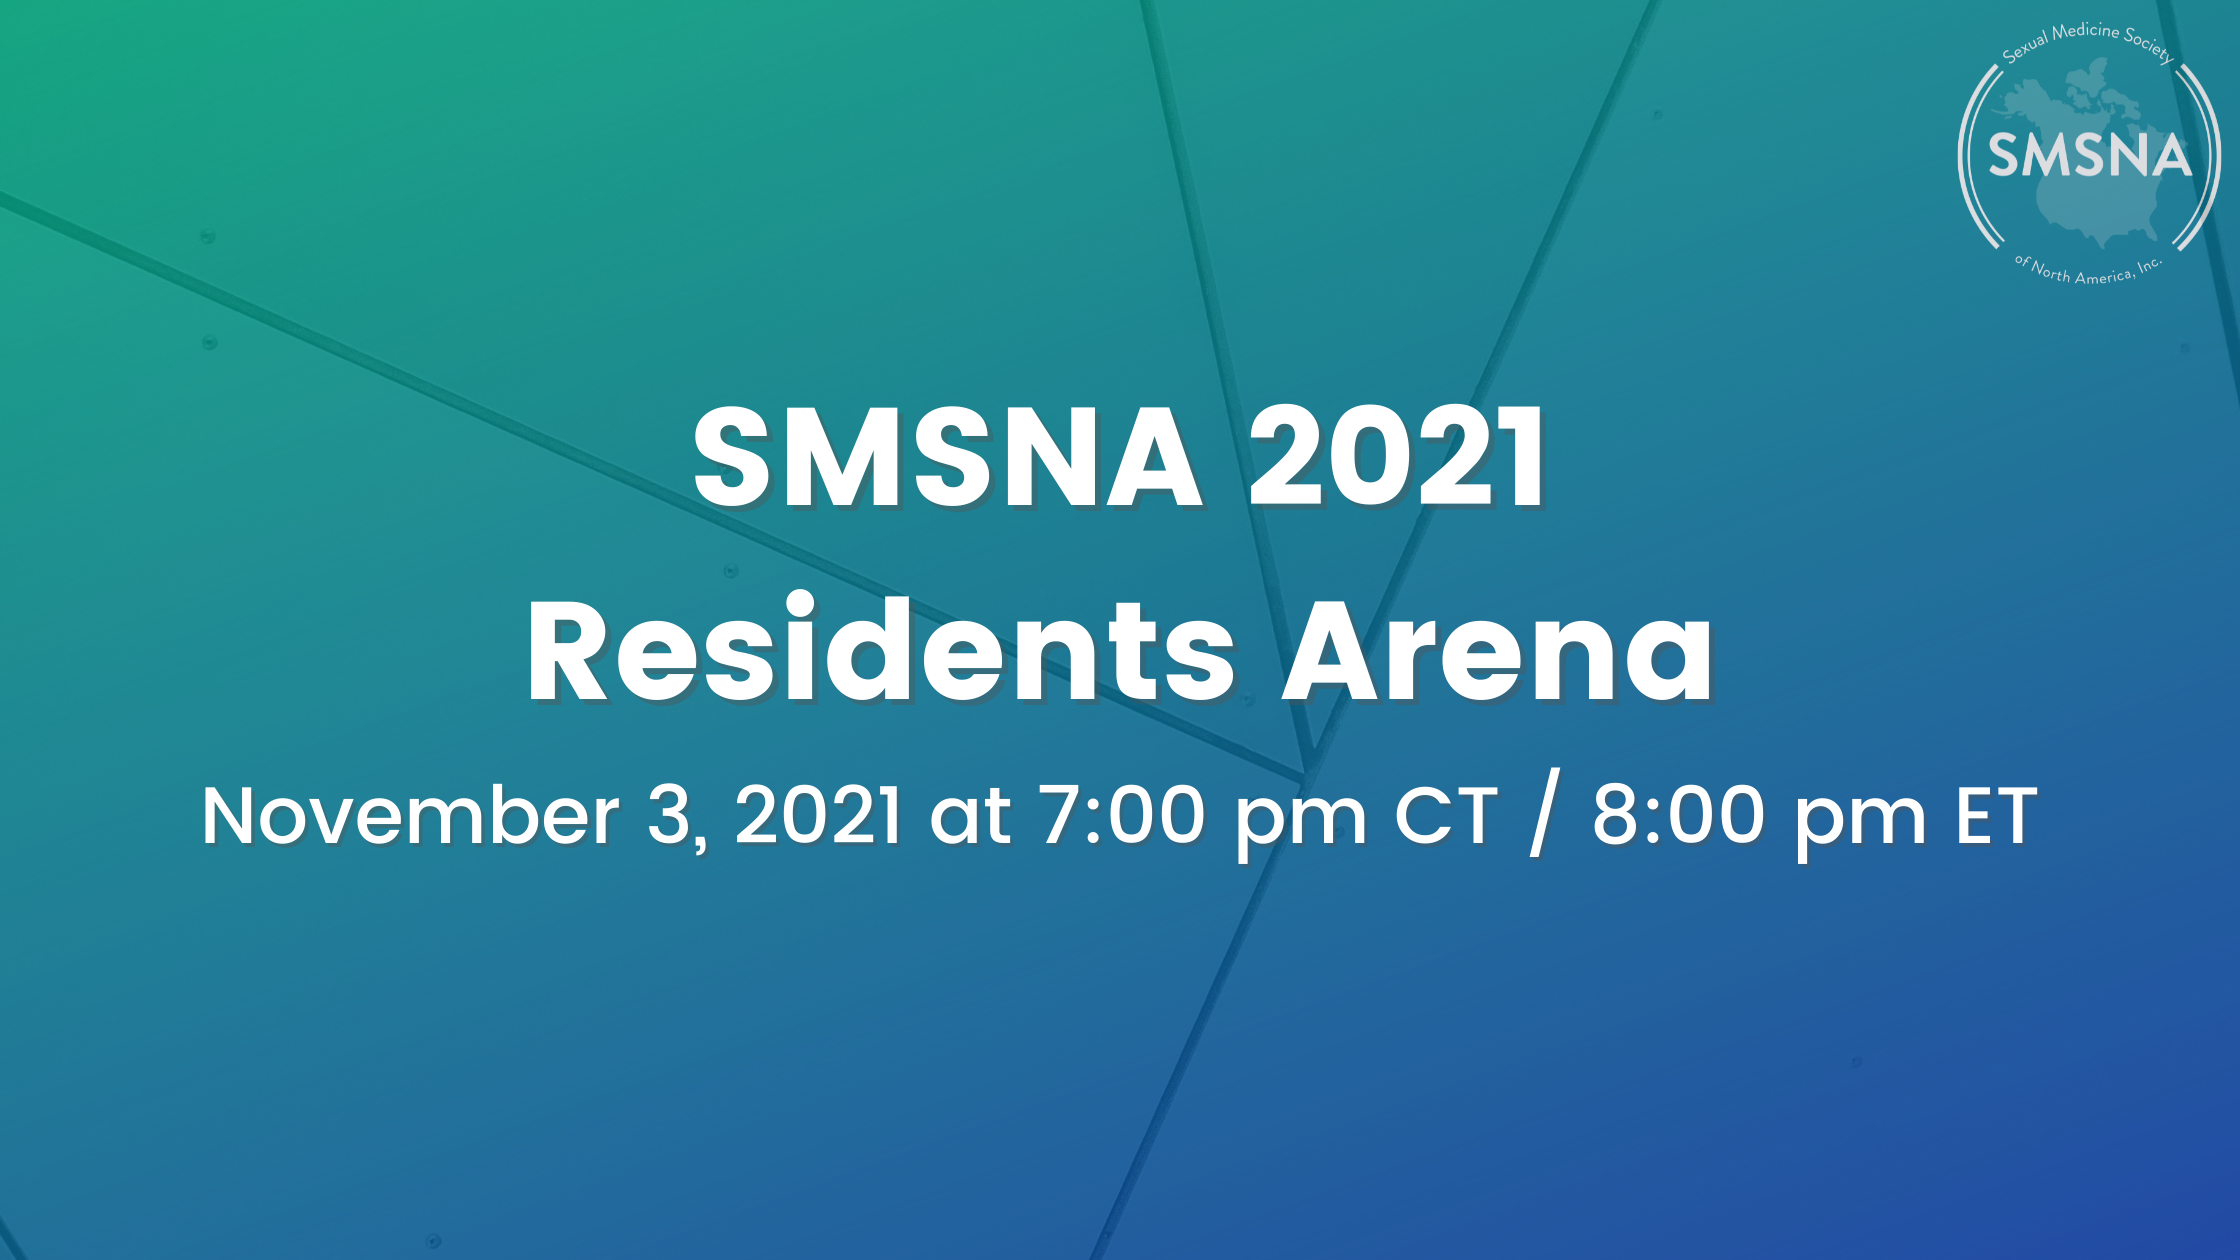 SMSNA 2021 Residents Arena